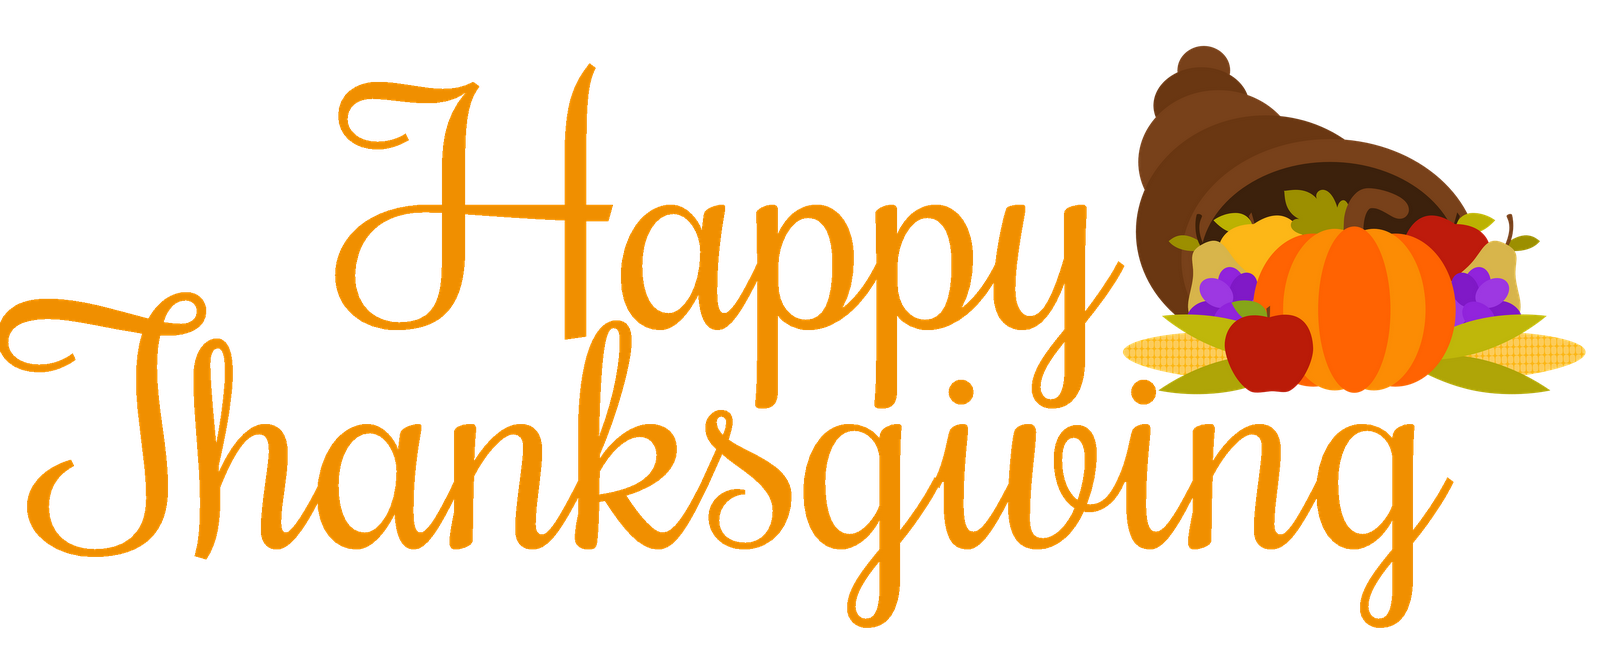 happy thanksgiving turkey wal